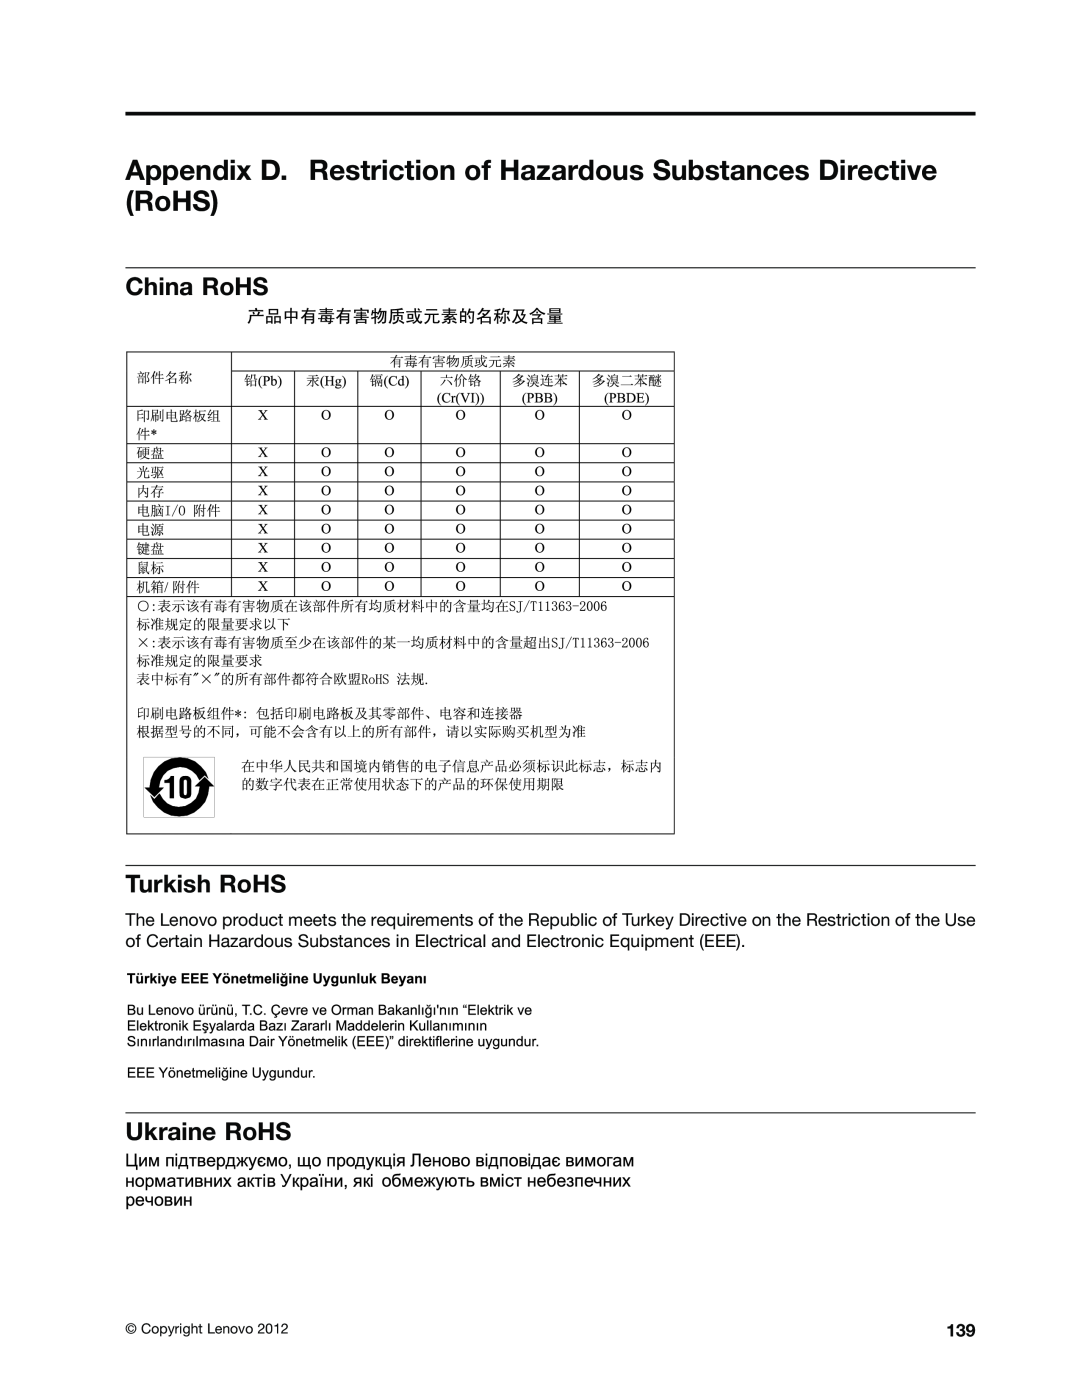 Lenovo 3214, 2988 Appendix D. Restriction of Hazardous Substances Directive RoHS, China RoHS Turkish RoHS, Ukraine RoHS 